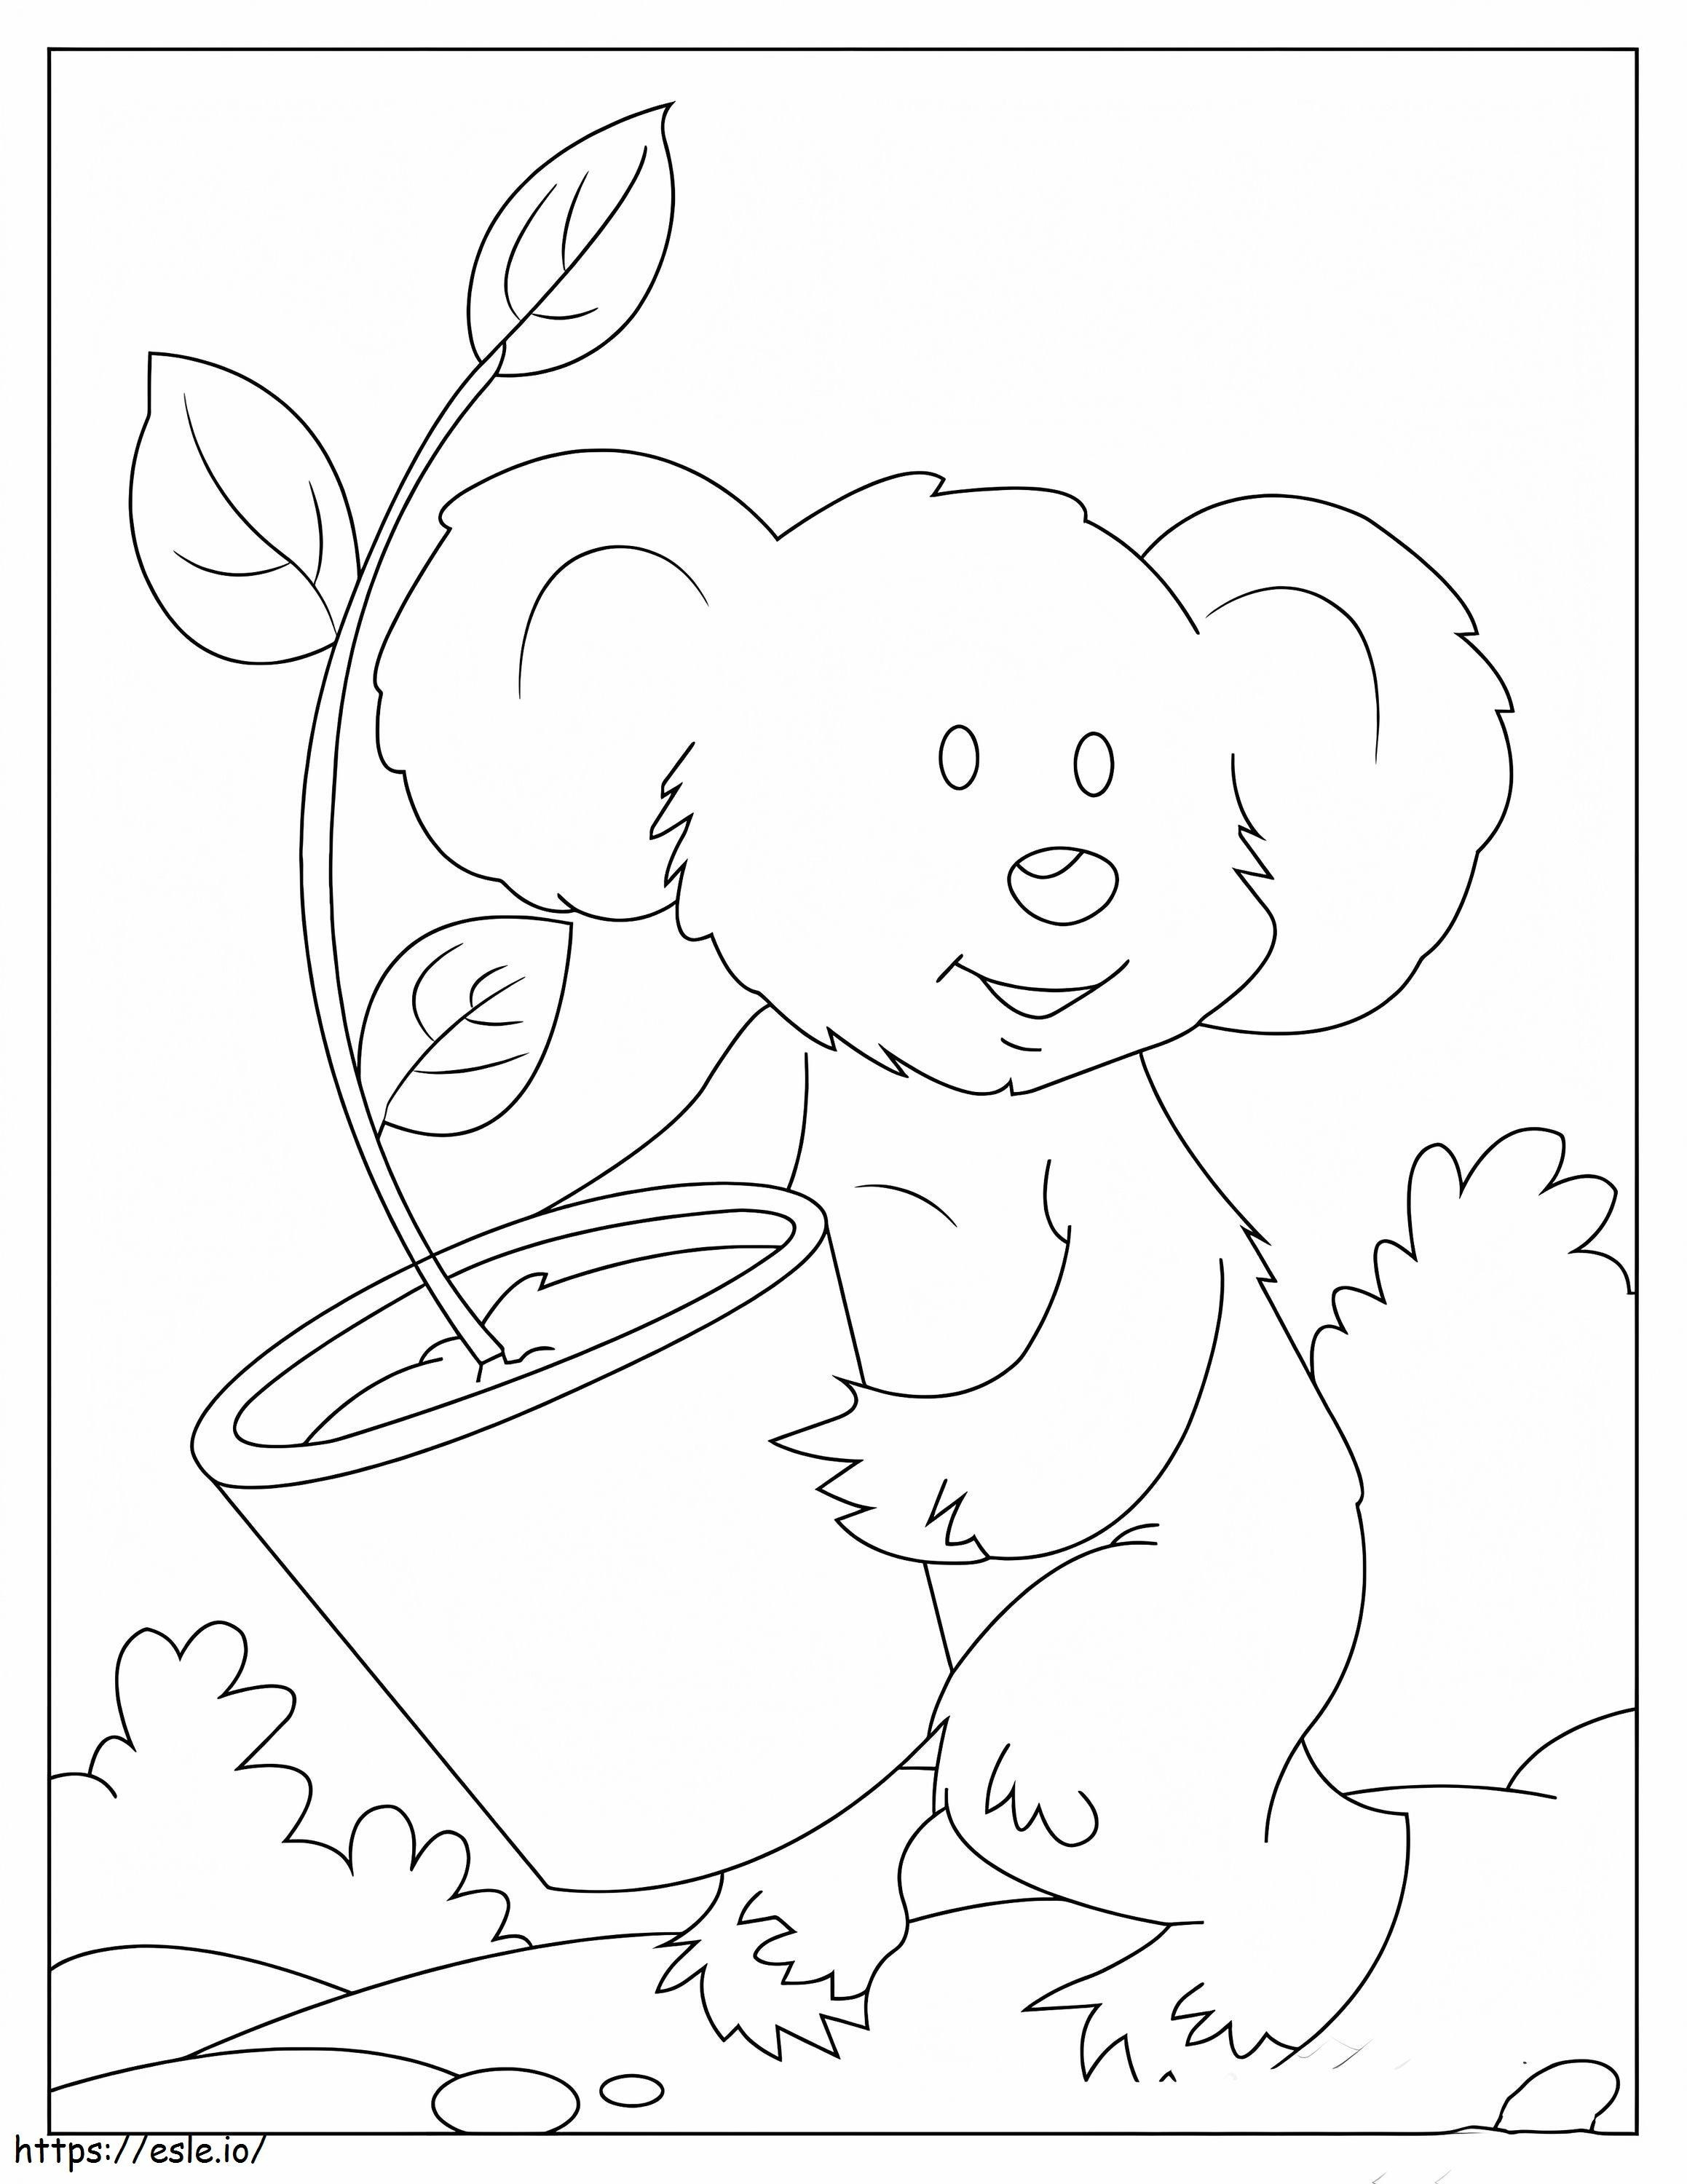 Koala Holding A Flower Pot coloring page